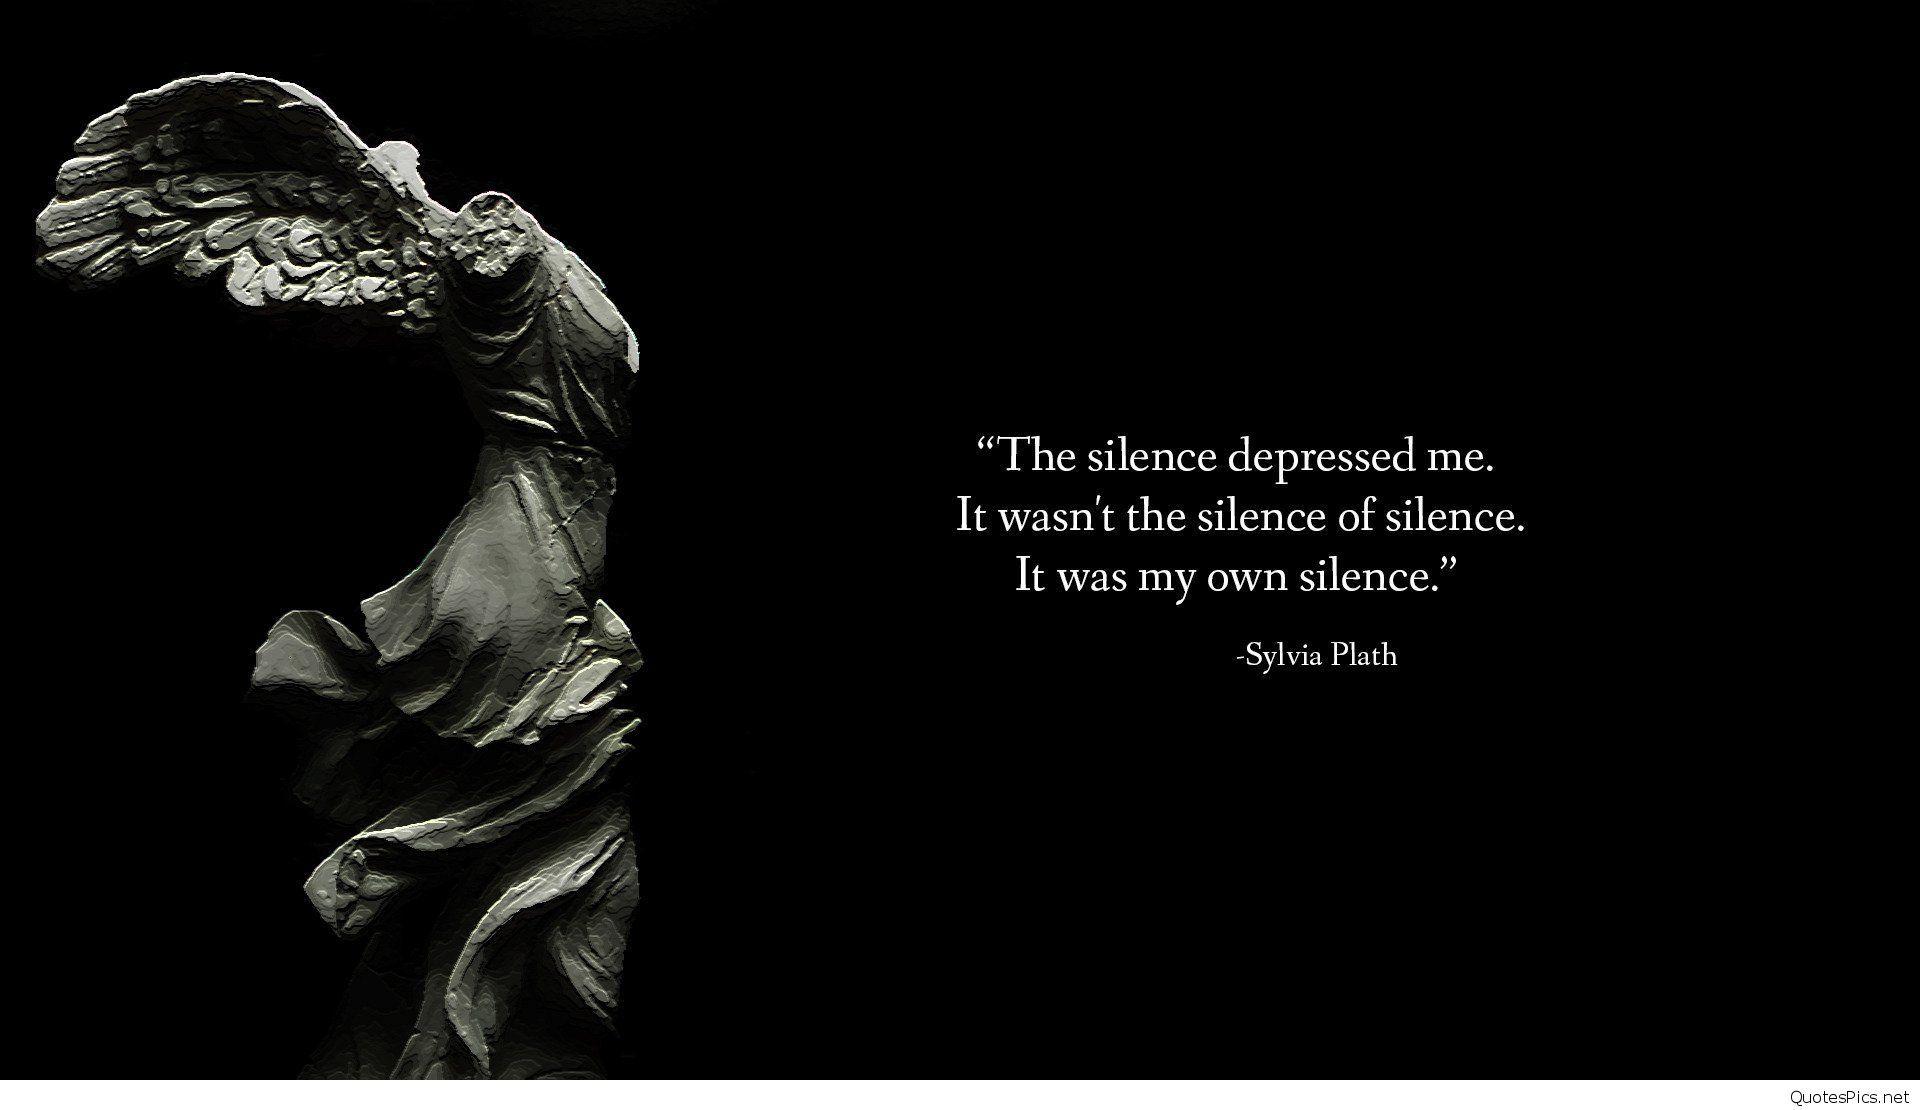 Sad depression quotes wallpaper